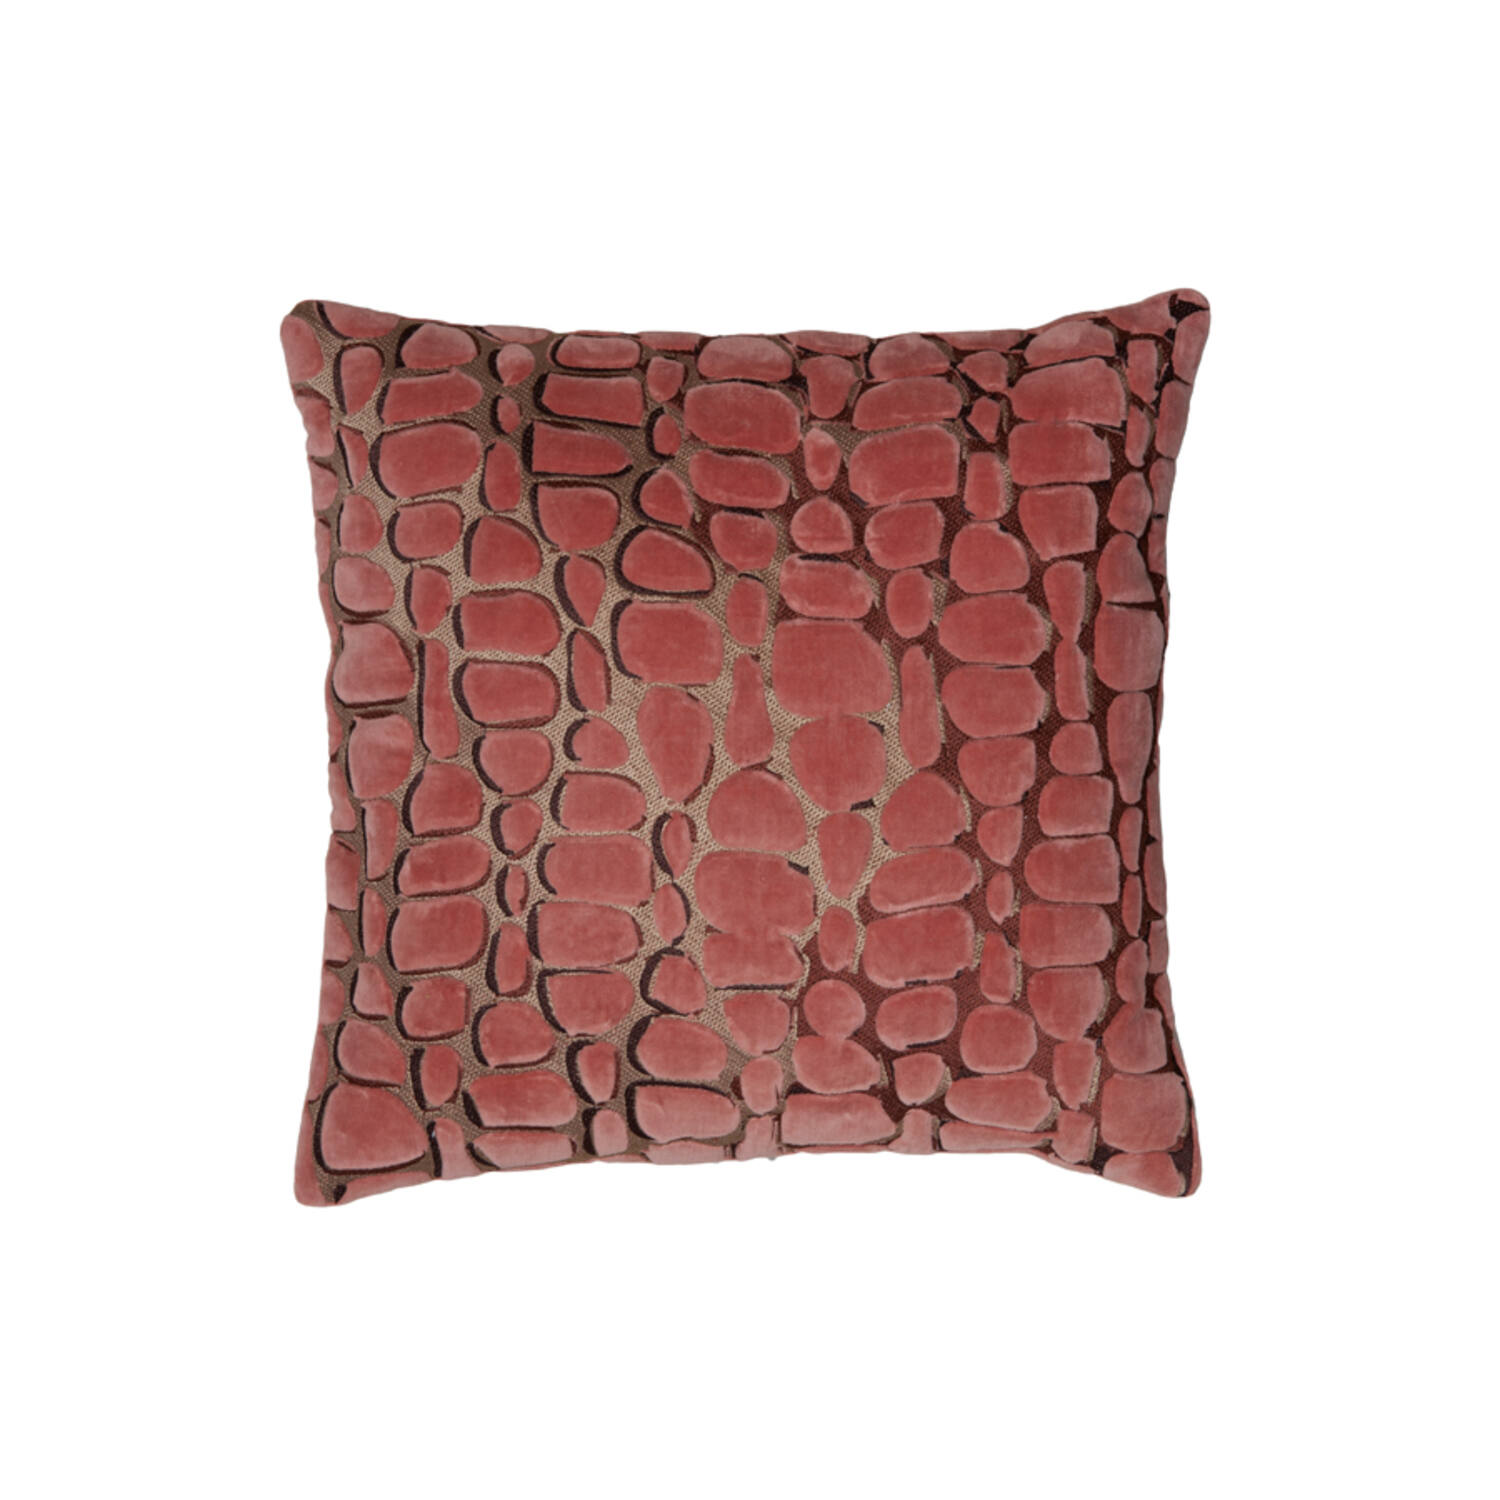 Cushion 45x45 cm TOMBA coral